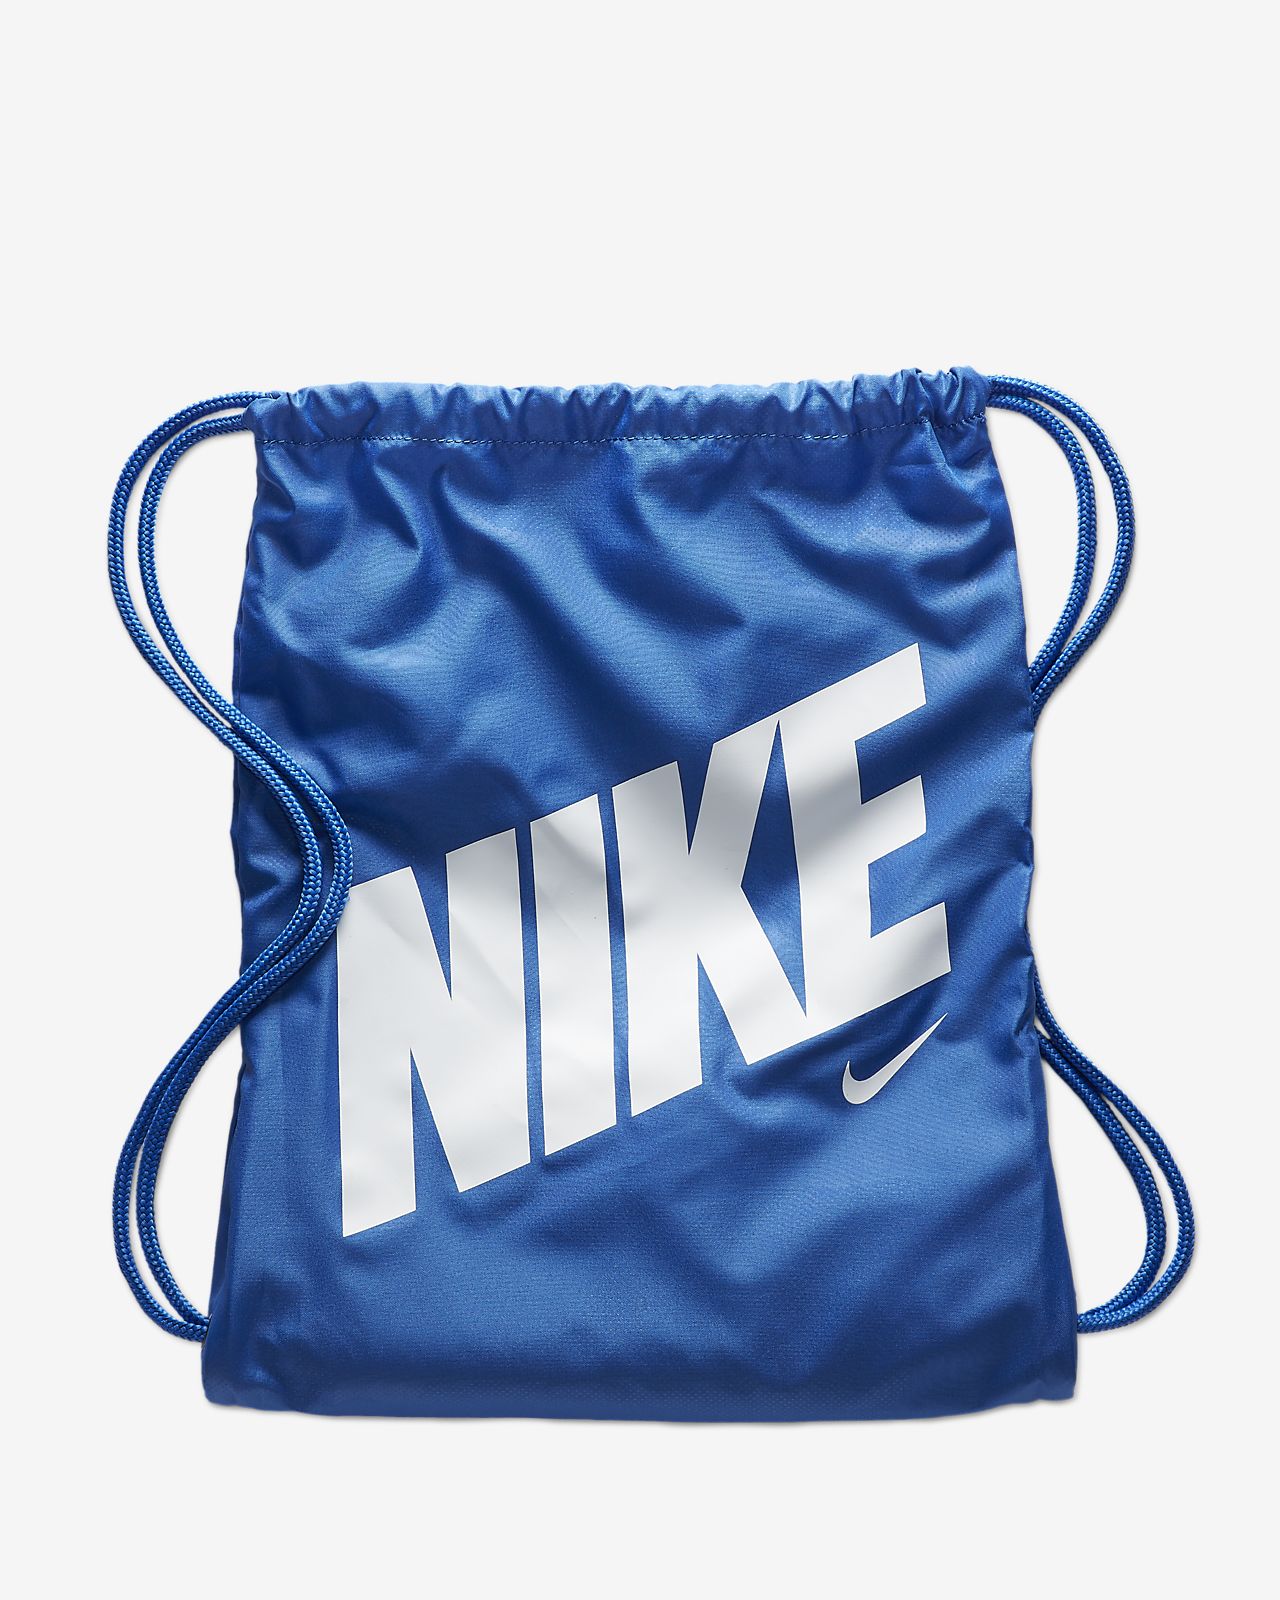 Nike Gym Sack $10 Shipped